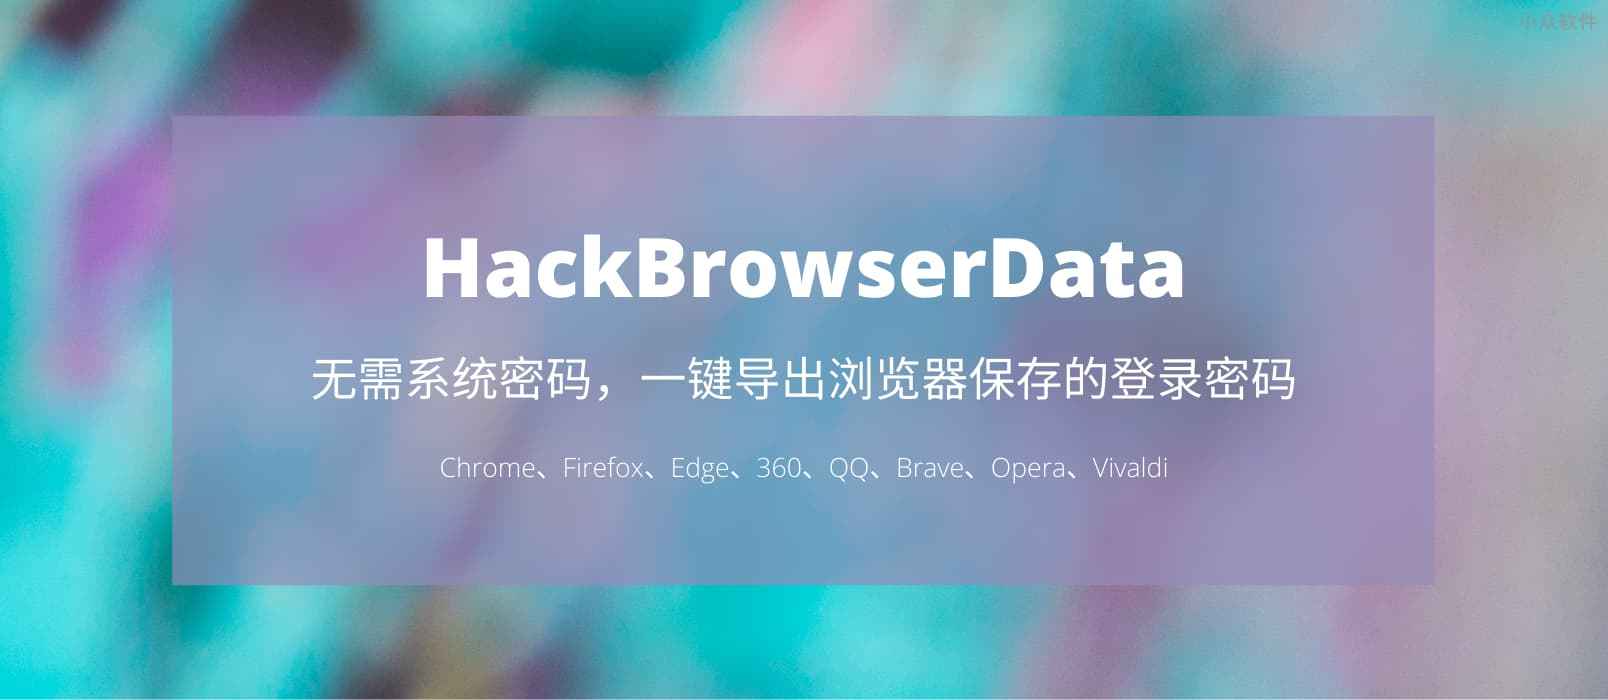 HackBrowserData – 无需密码，一键导出 Chrome、Firefox、Edge、360、QQ、Brave 浏览器保存的登录密码、历史记录、Cookies、书签